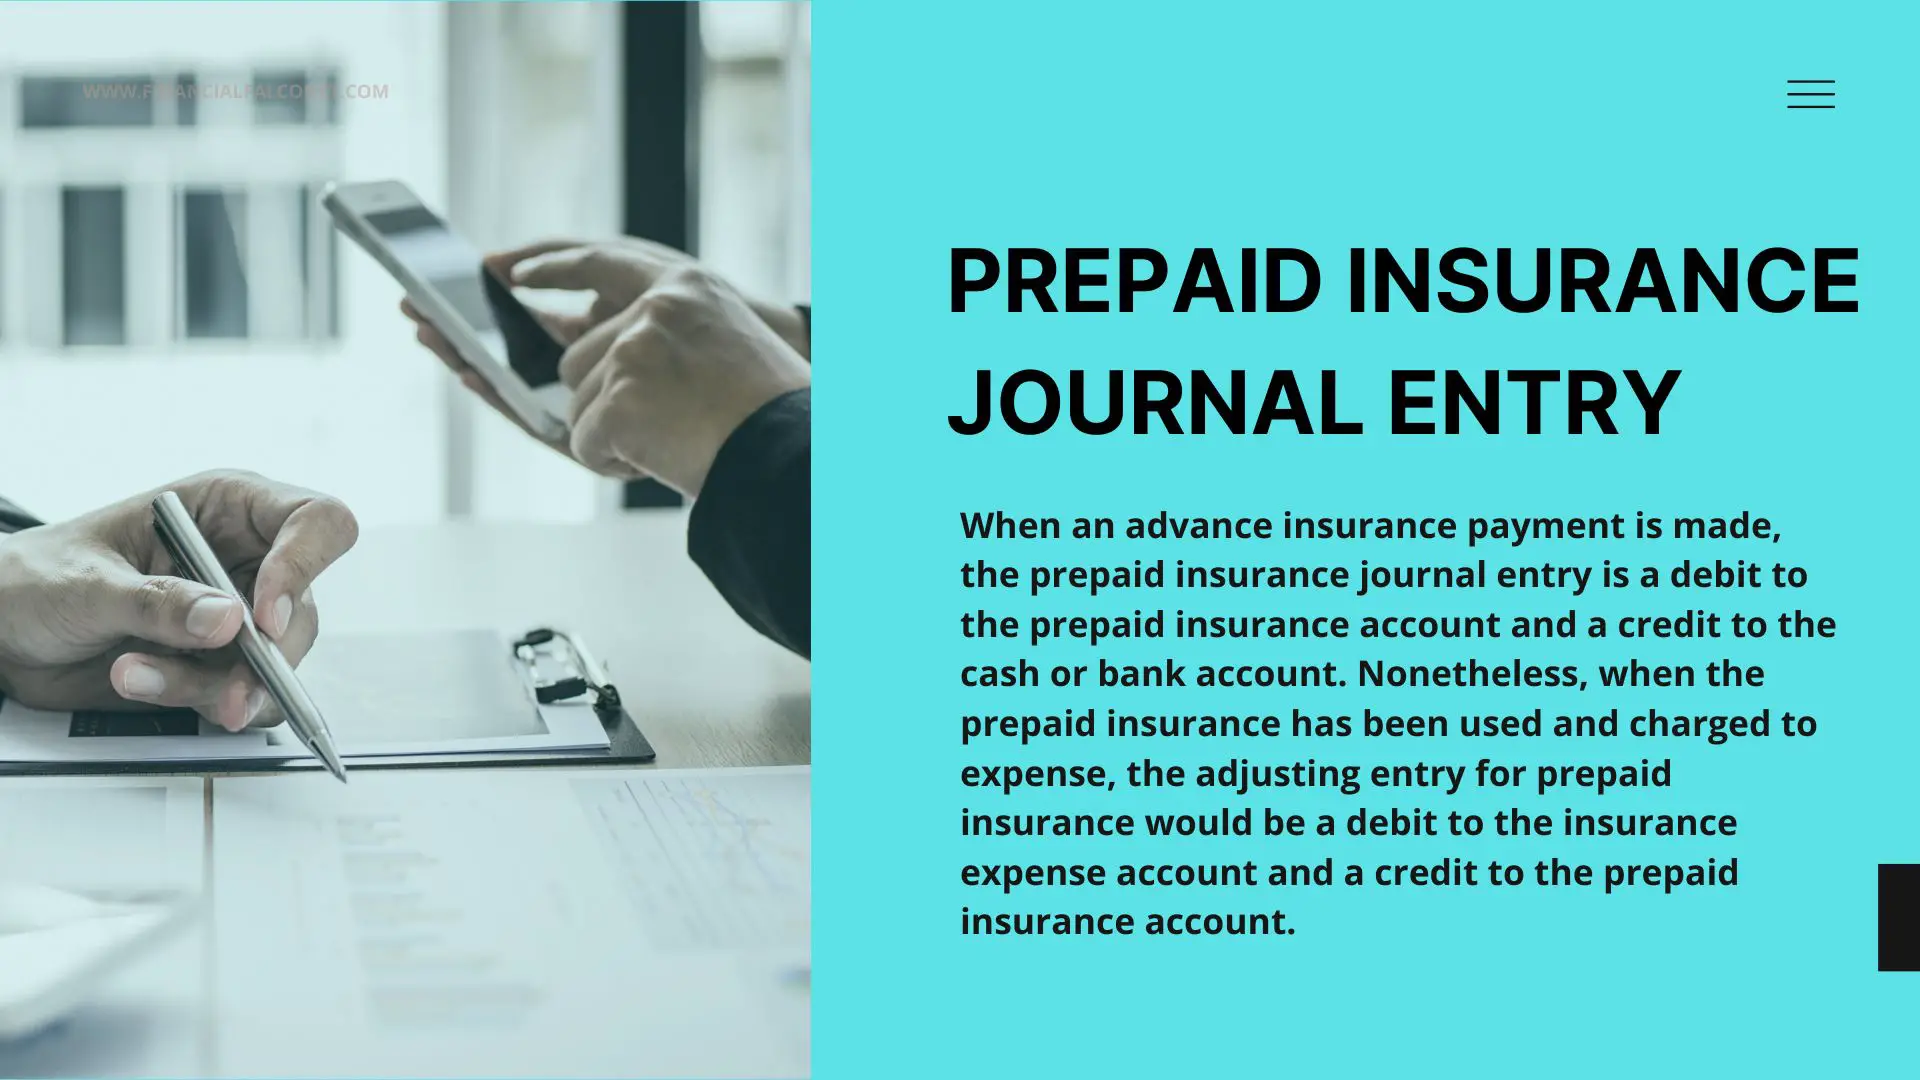 Prepaid insurance journal entry